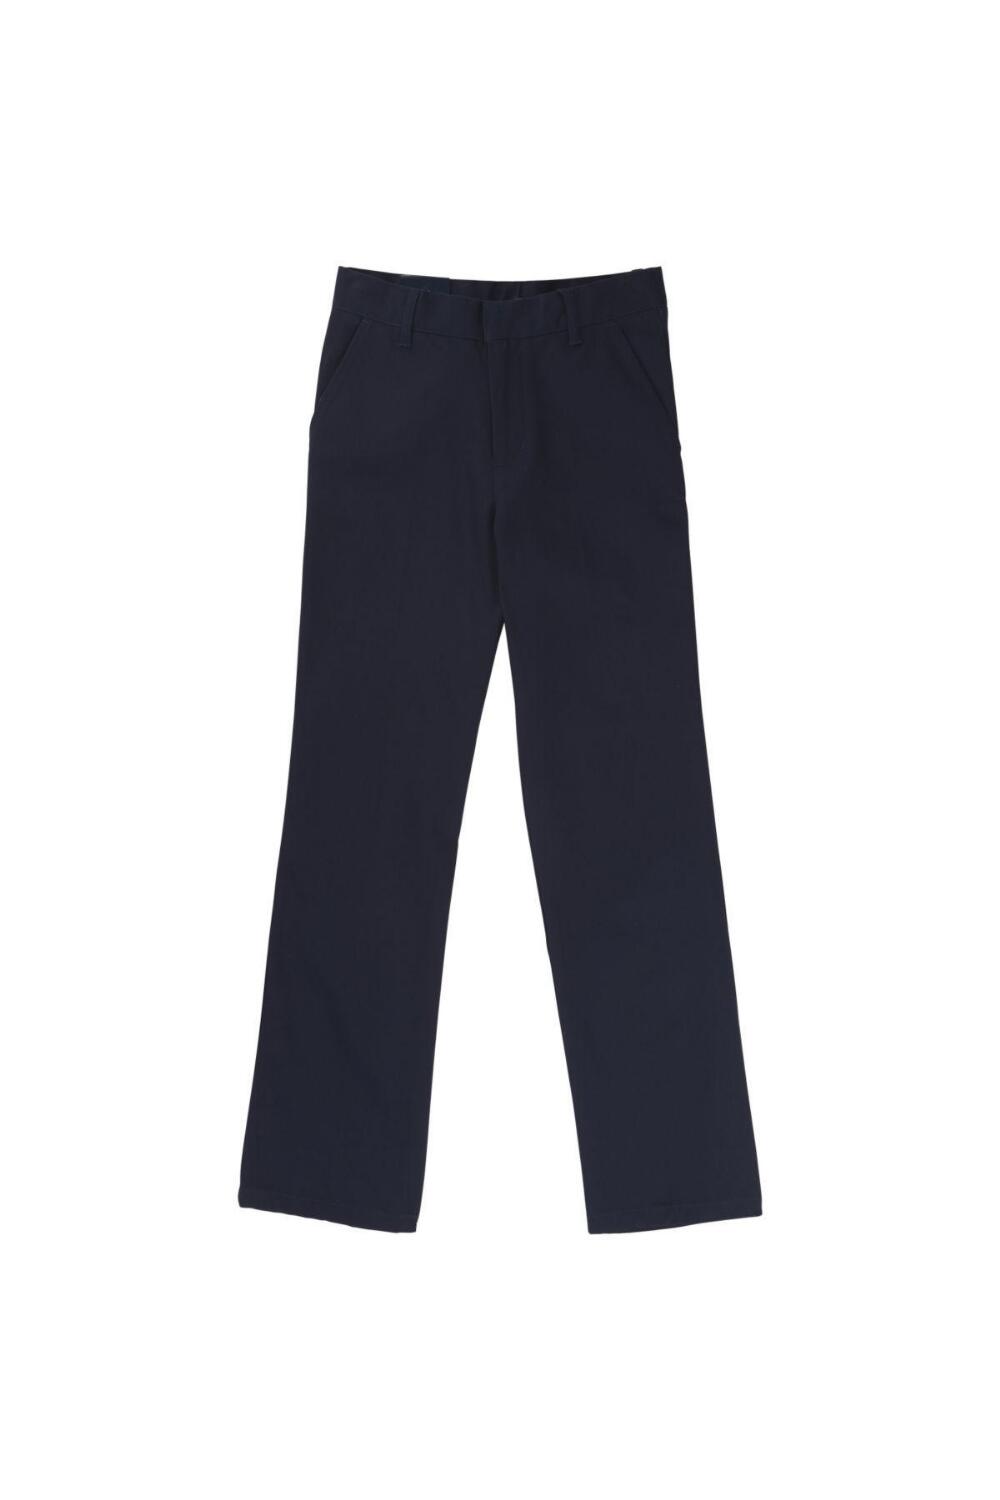 Boy's Adjustable Waist Double Knee Pant (Pant Color: Navy - YLS, Pant Size: Size 4)